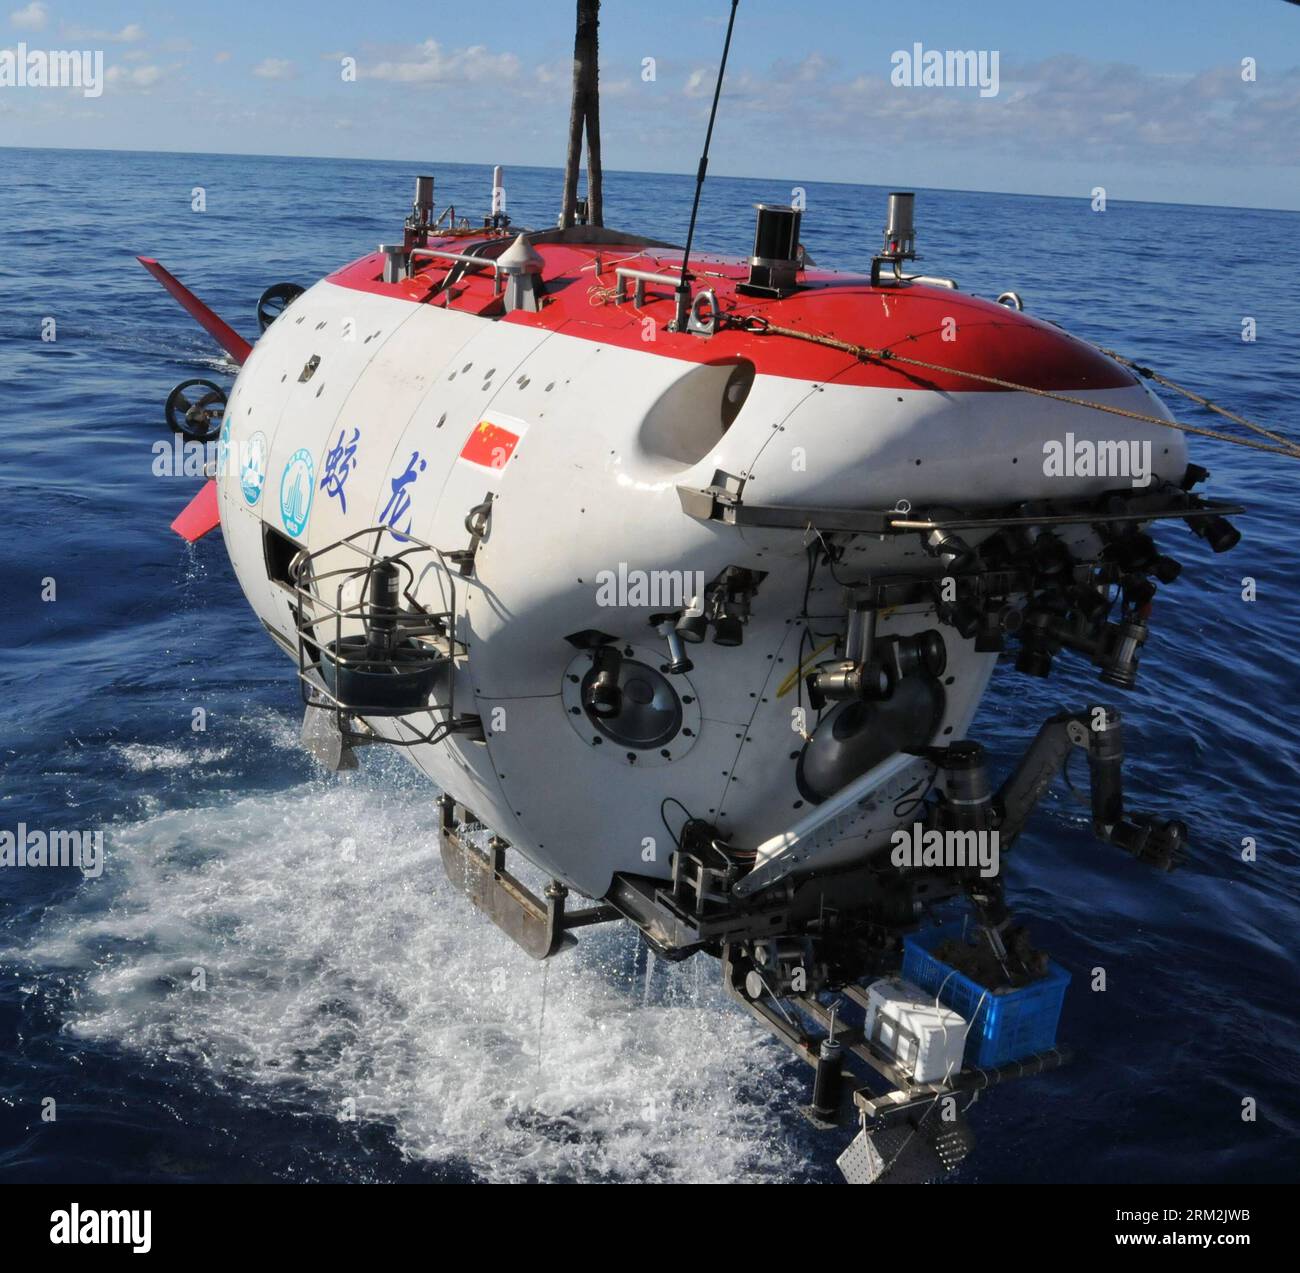 Bildnummer: 59852525  Datum: 18.06.2013  Copyright: imago/Xinhua China s manned deep-sea submersible Jiaolong is seen after finishing a deep-sea dive into the south China sea, June 18, 2013. The Jiaolong manned deep-sea submersible on Tuesday carried its first scientist Zhou Huaiyang, professor of the School of Marine and Earth Science at Tongji University, as crew member during a deep-sea dive. (Xinhua/Zhang Xudong) (xzj) CHINA-SOUTH CHINA SEA-JIAOLONG-SCIENTIST DIVE-BACK (CN) PUBLICATIONxNOTxINxCHN Gesellschaft x2x xkg 2013 quadrat o0 Forschung Wissenschaft Technik Uboot Tauchboot Tauchfahrt Stock Photo